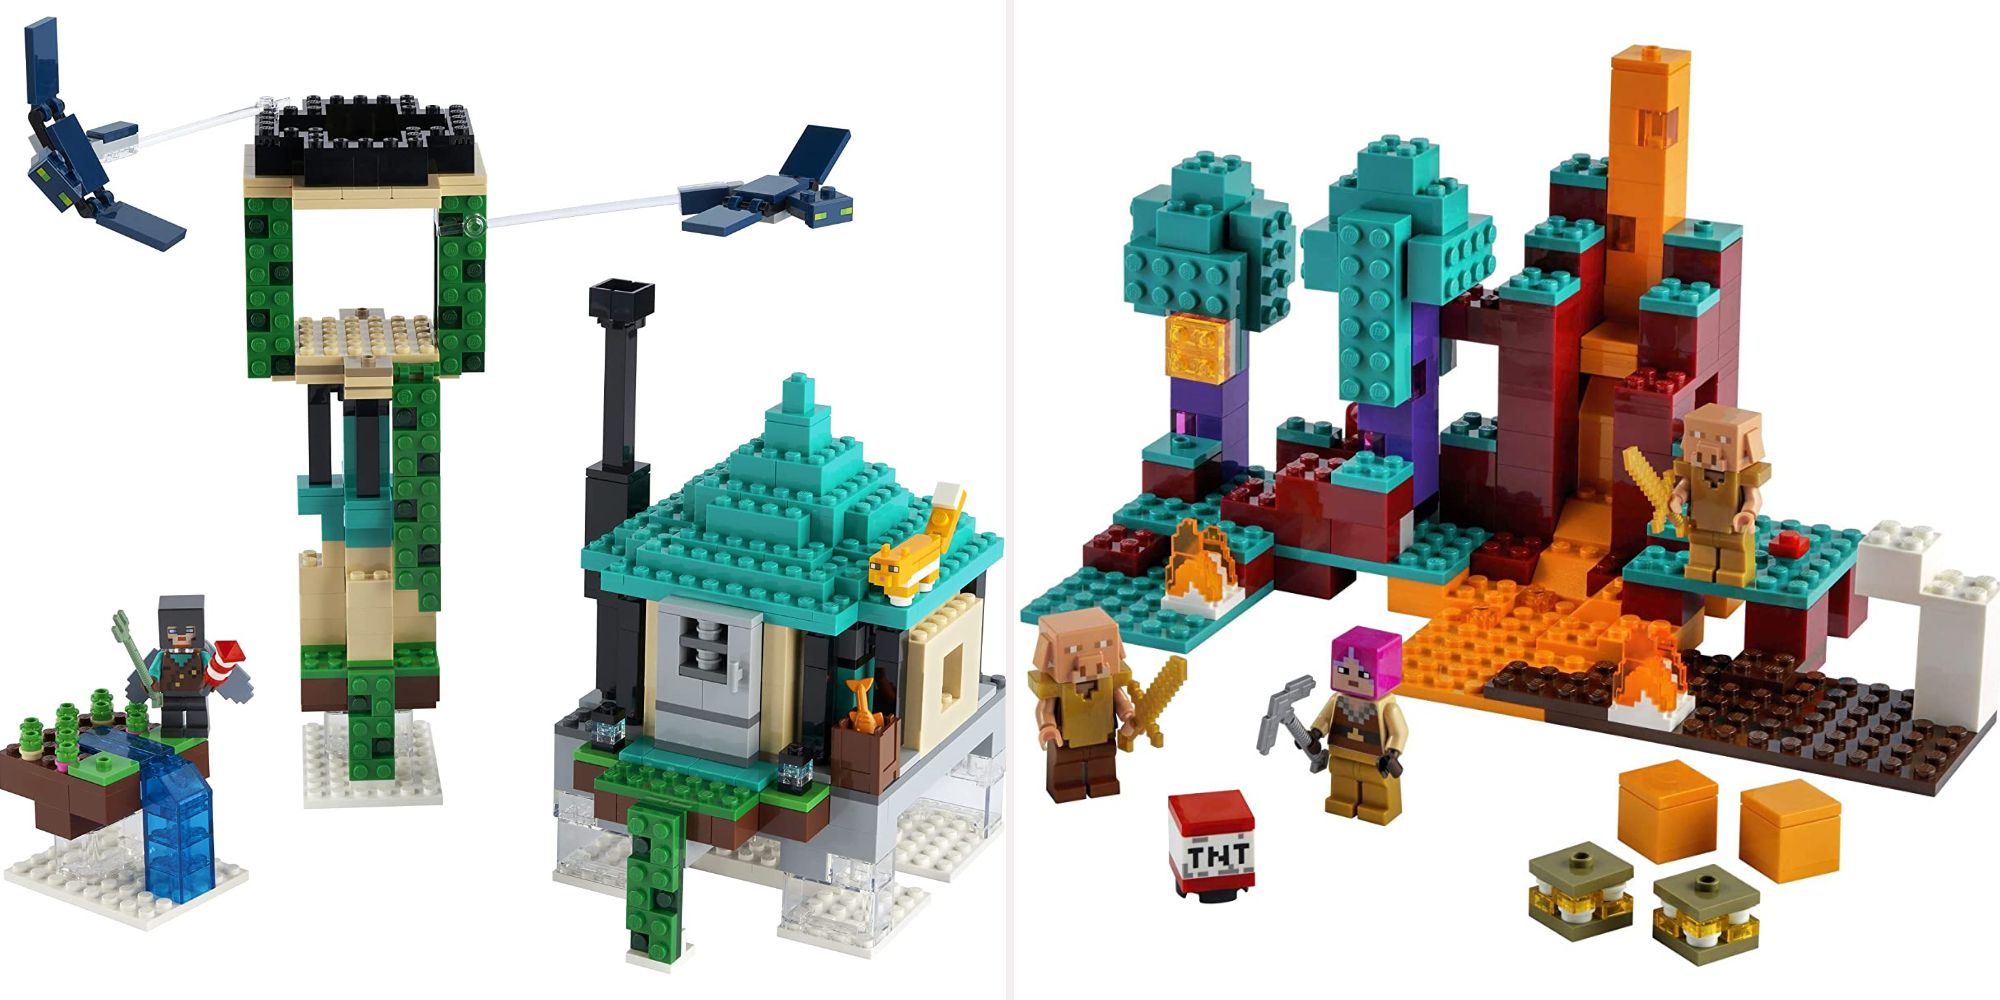 Minecraft Lego Phantoms Tower and Warped Forest